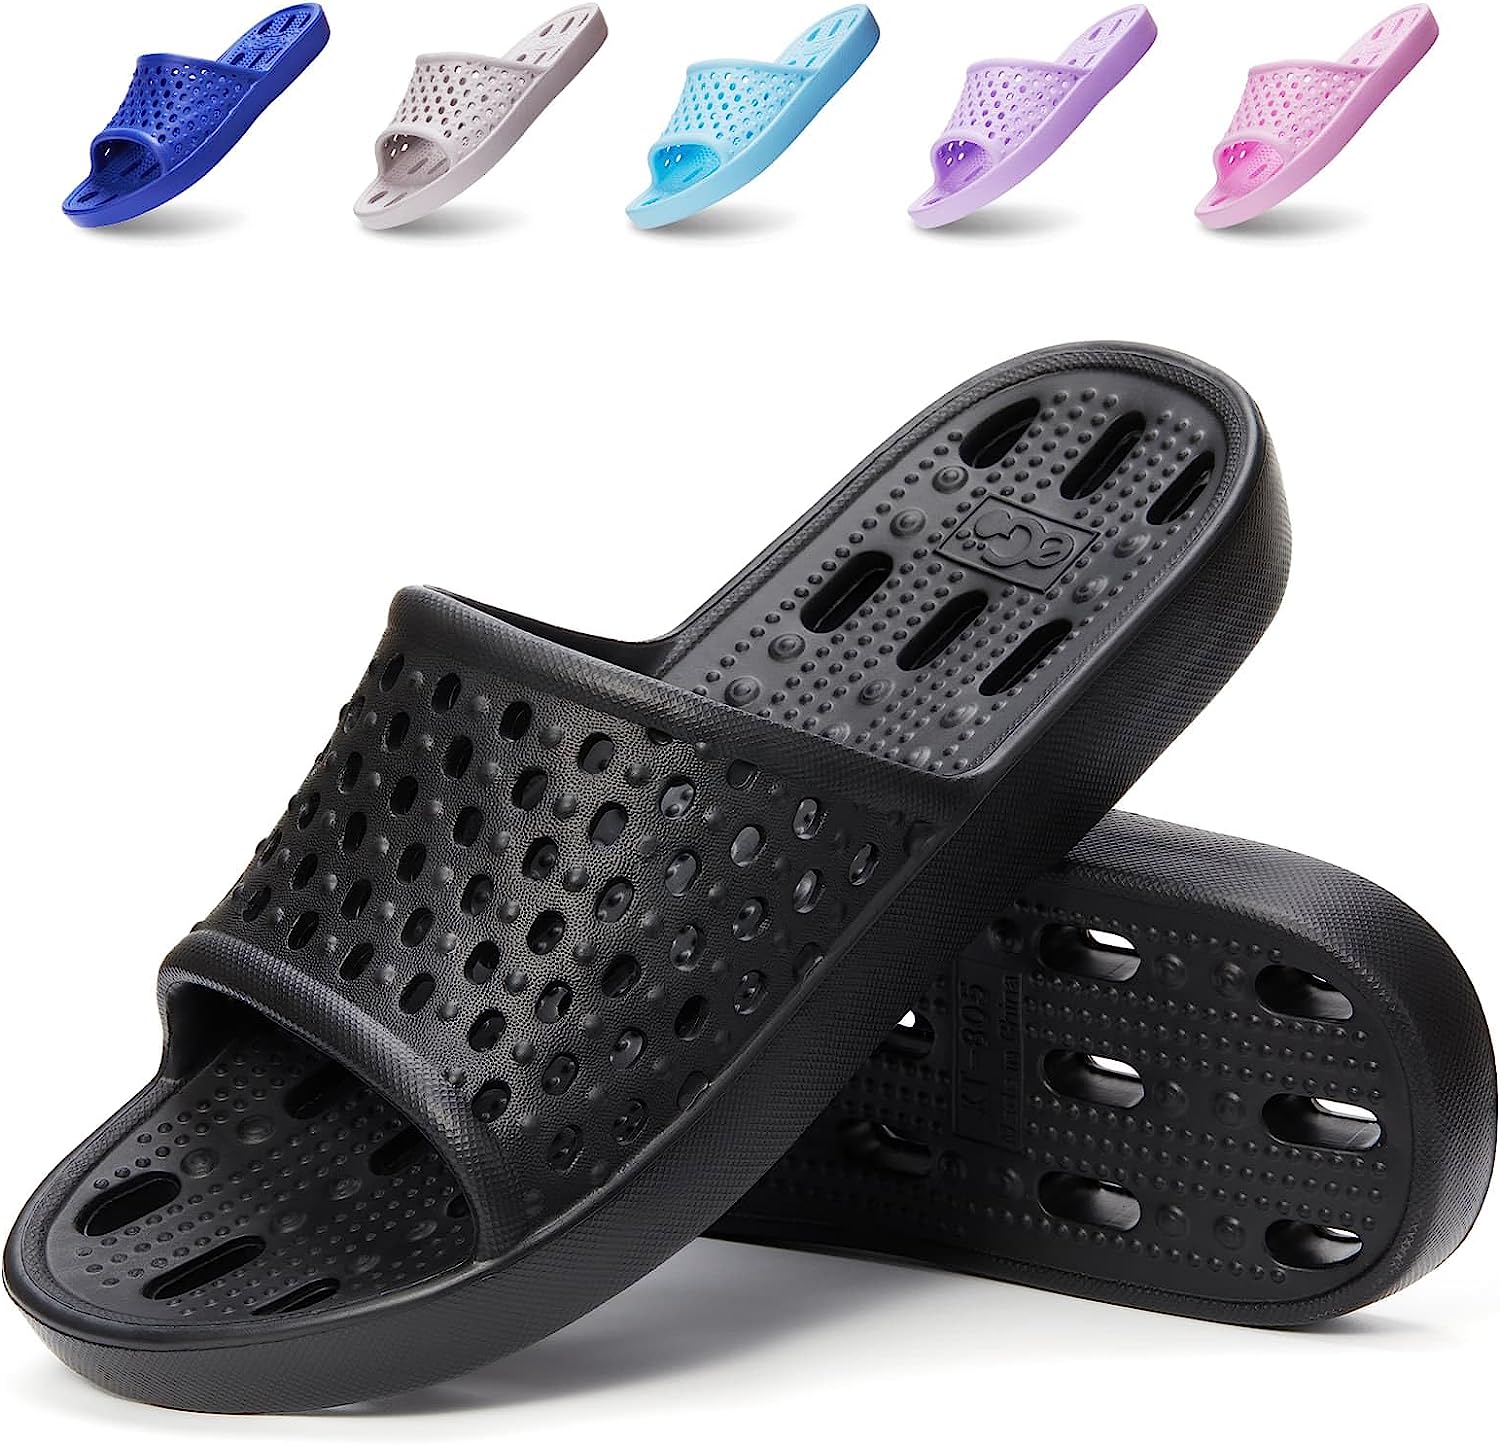 Xomiboe Shower Shoes Quick Drying Non-Slip Comfortable [...]